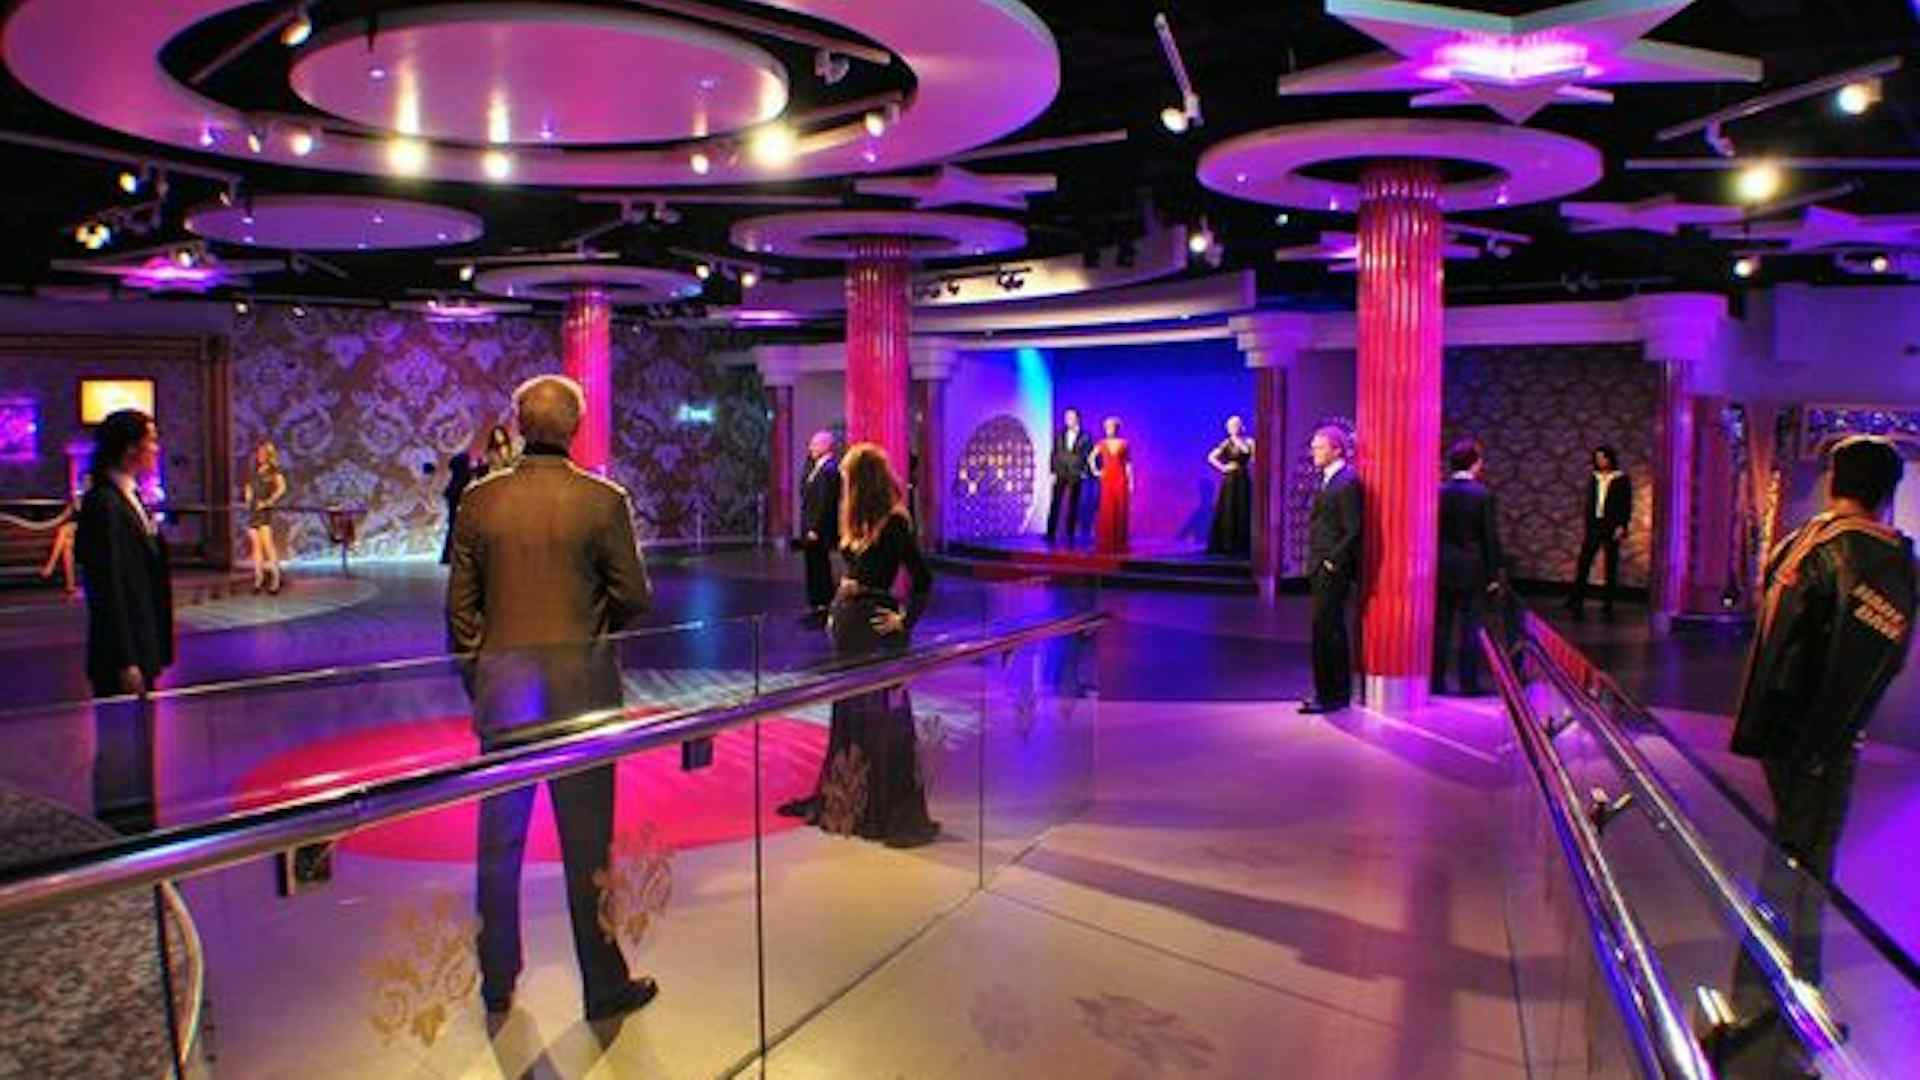 Unique Venue of the Month: Madame Tussauds